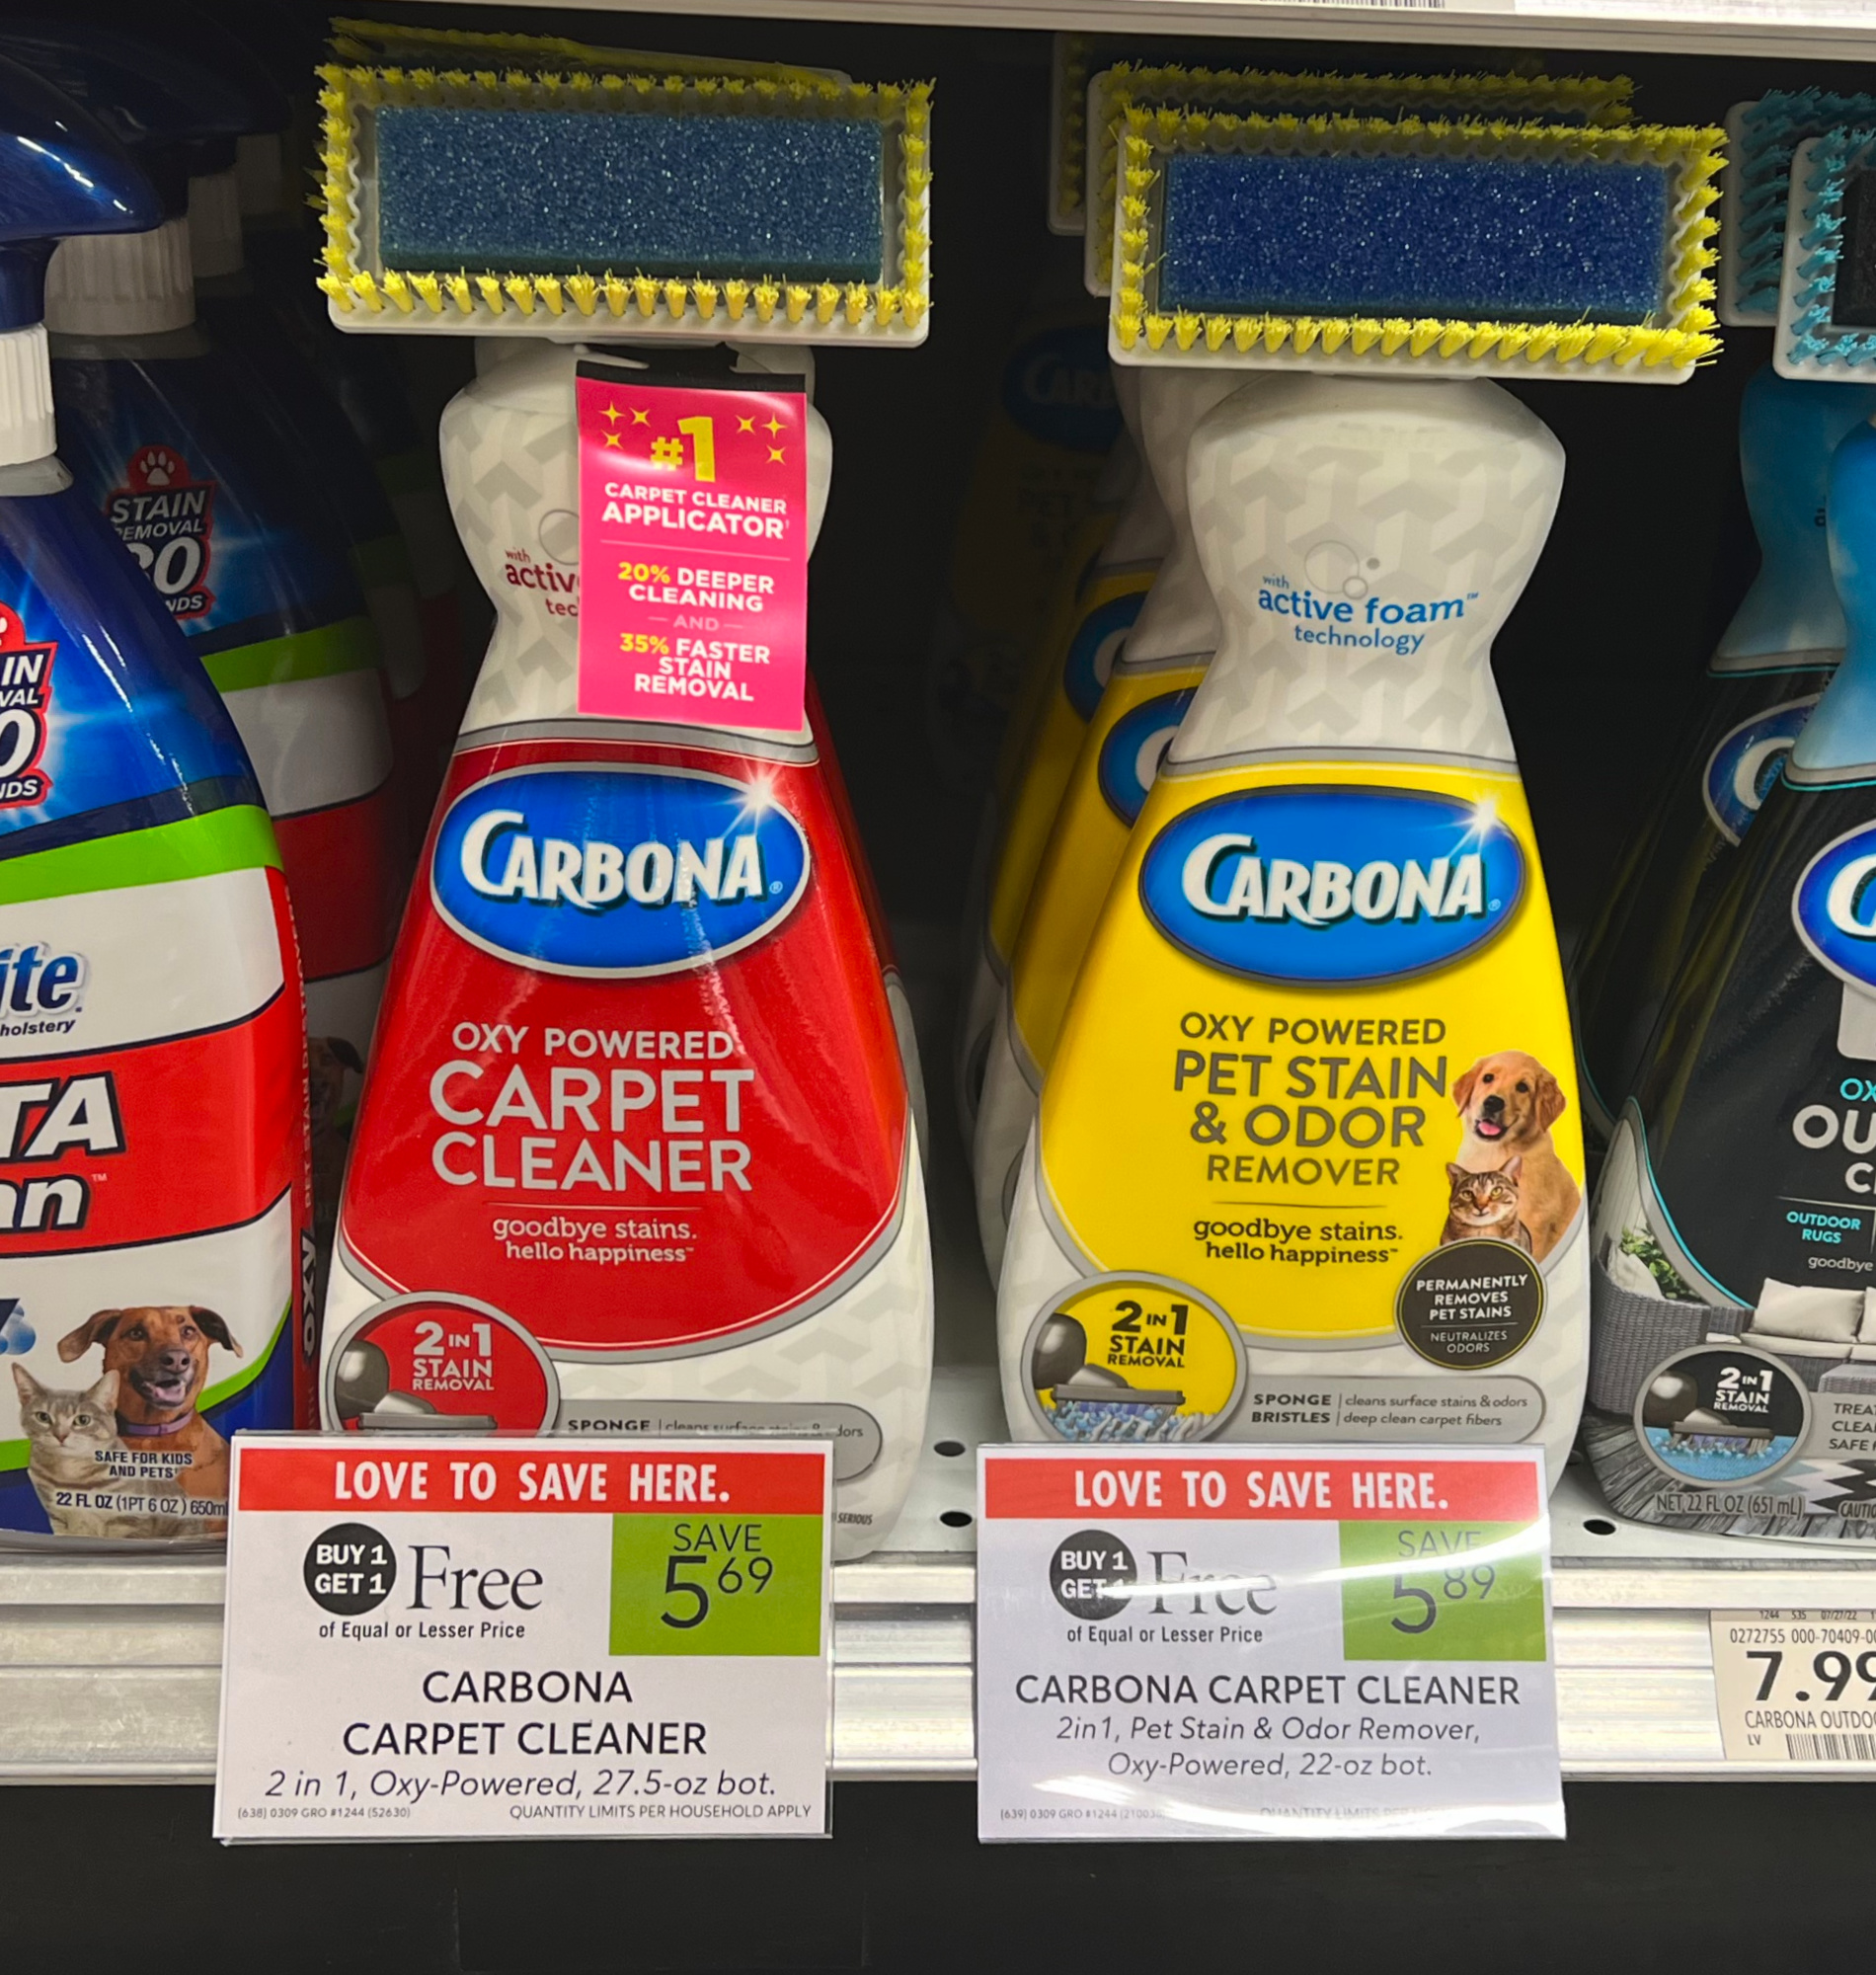 Carbona Carpet Cleaner As Low As 85¢ At Publix - iHeartPublix